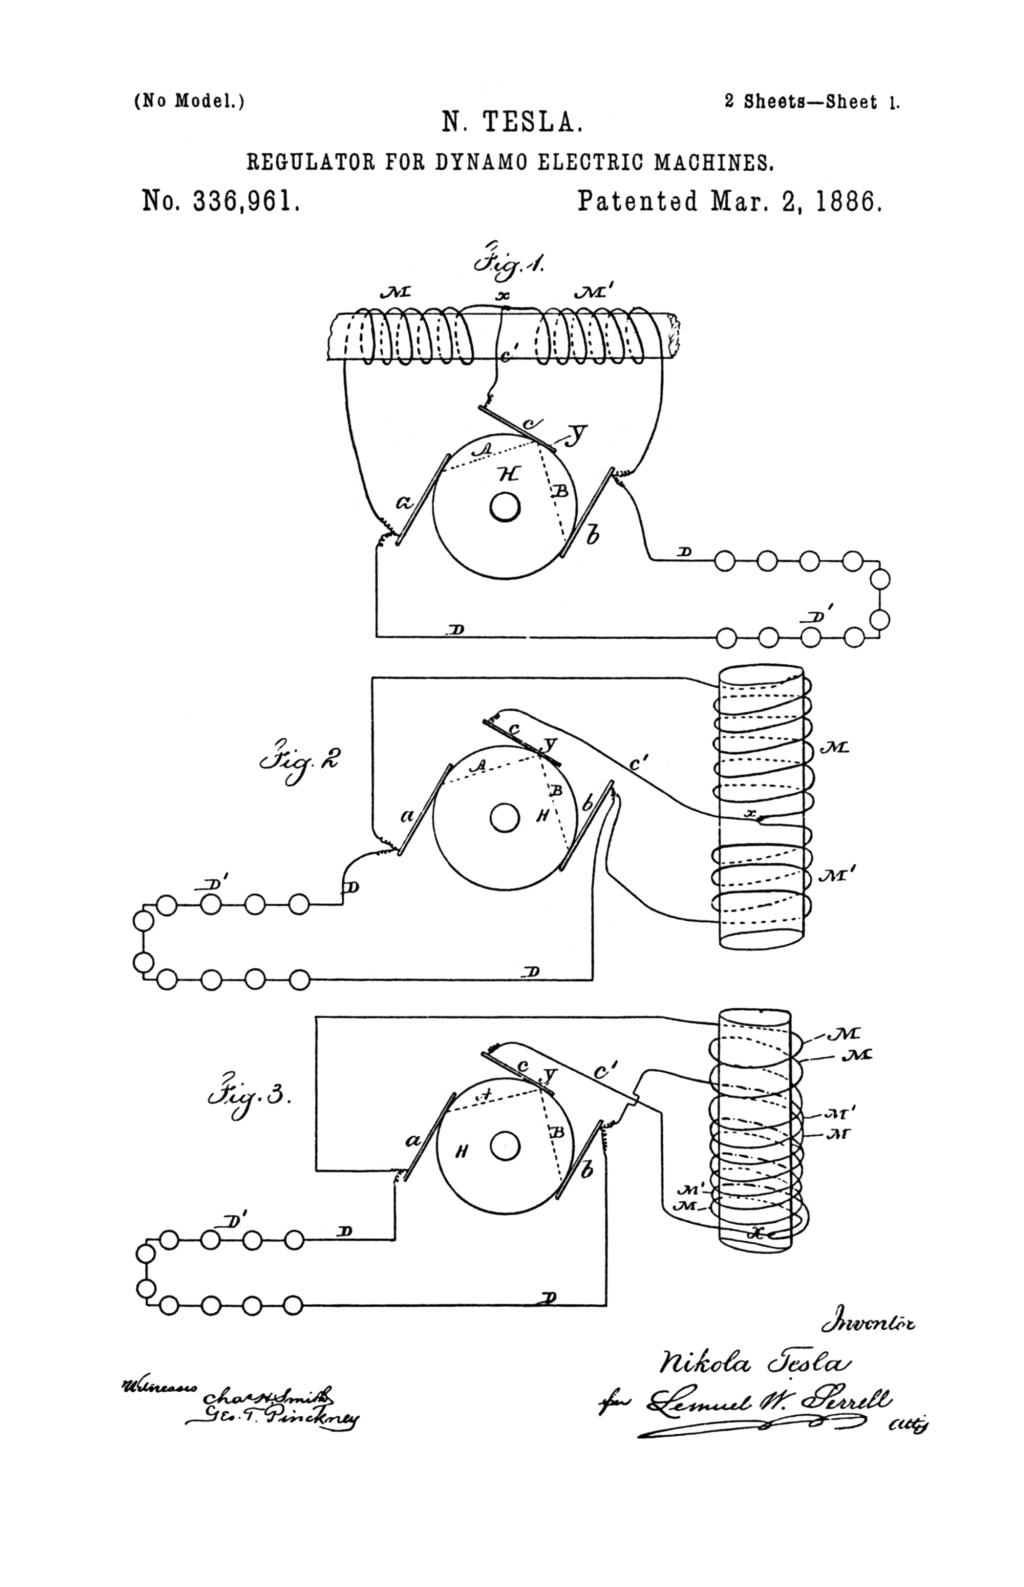 Nikola Tesla U.S. Patent 336,961 - Regulator for Dynamo-Electric Machines - Image 1